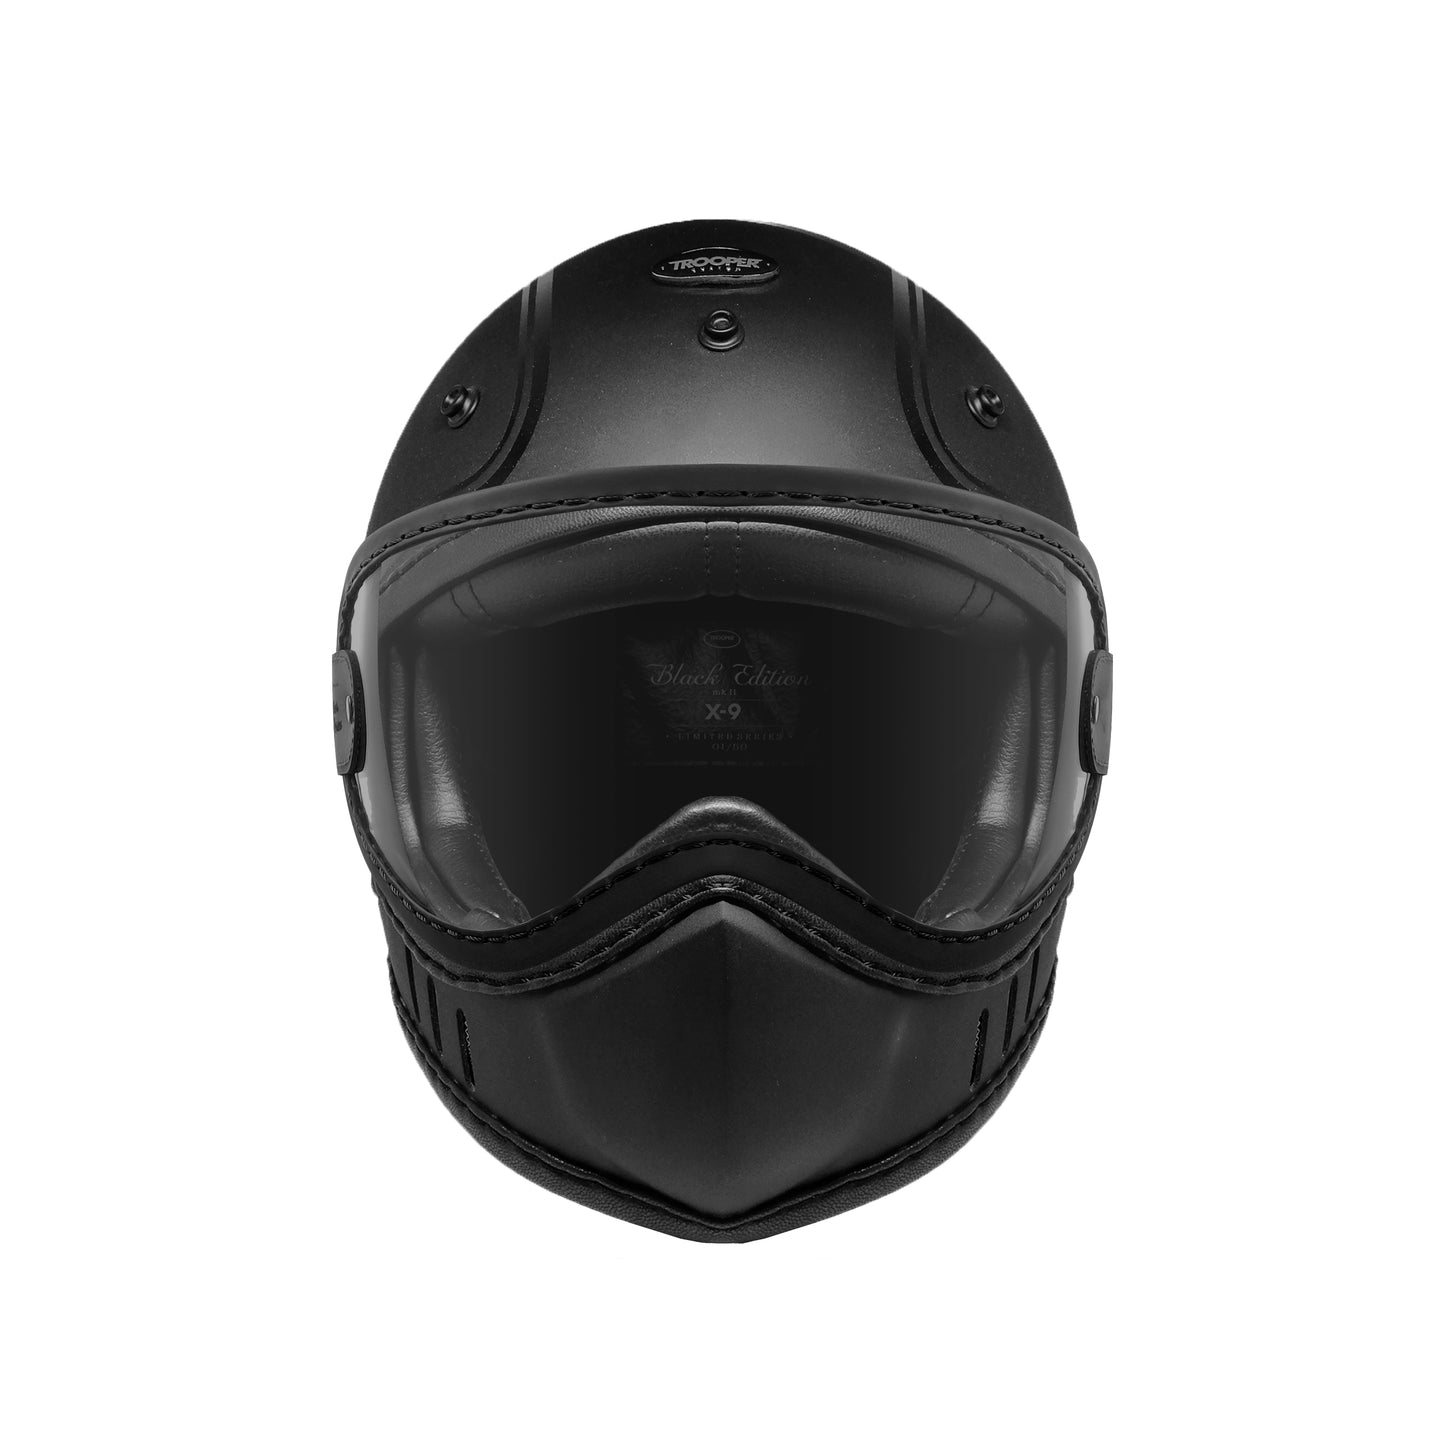 X9 Black Edition Helmet - Special Edition